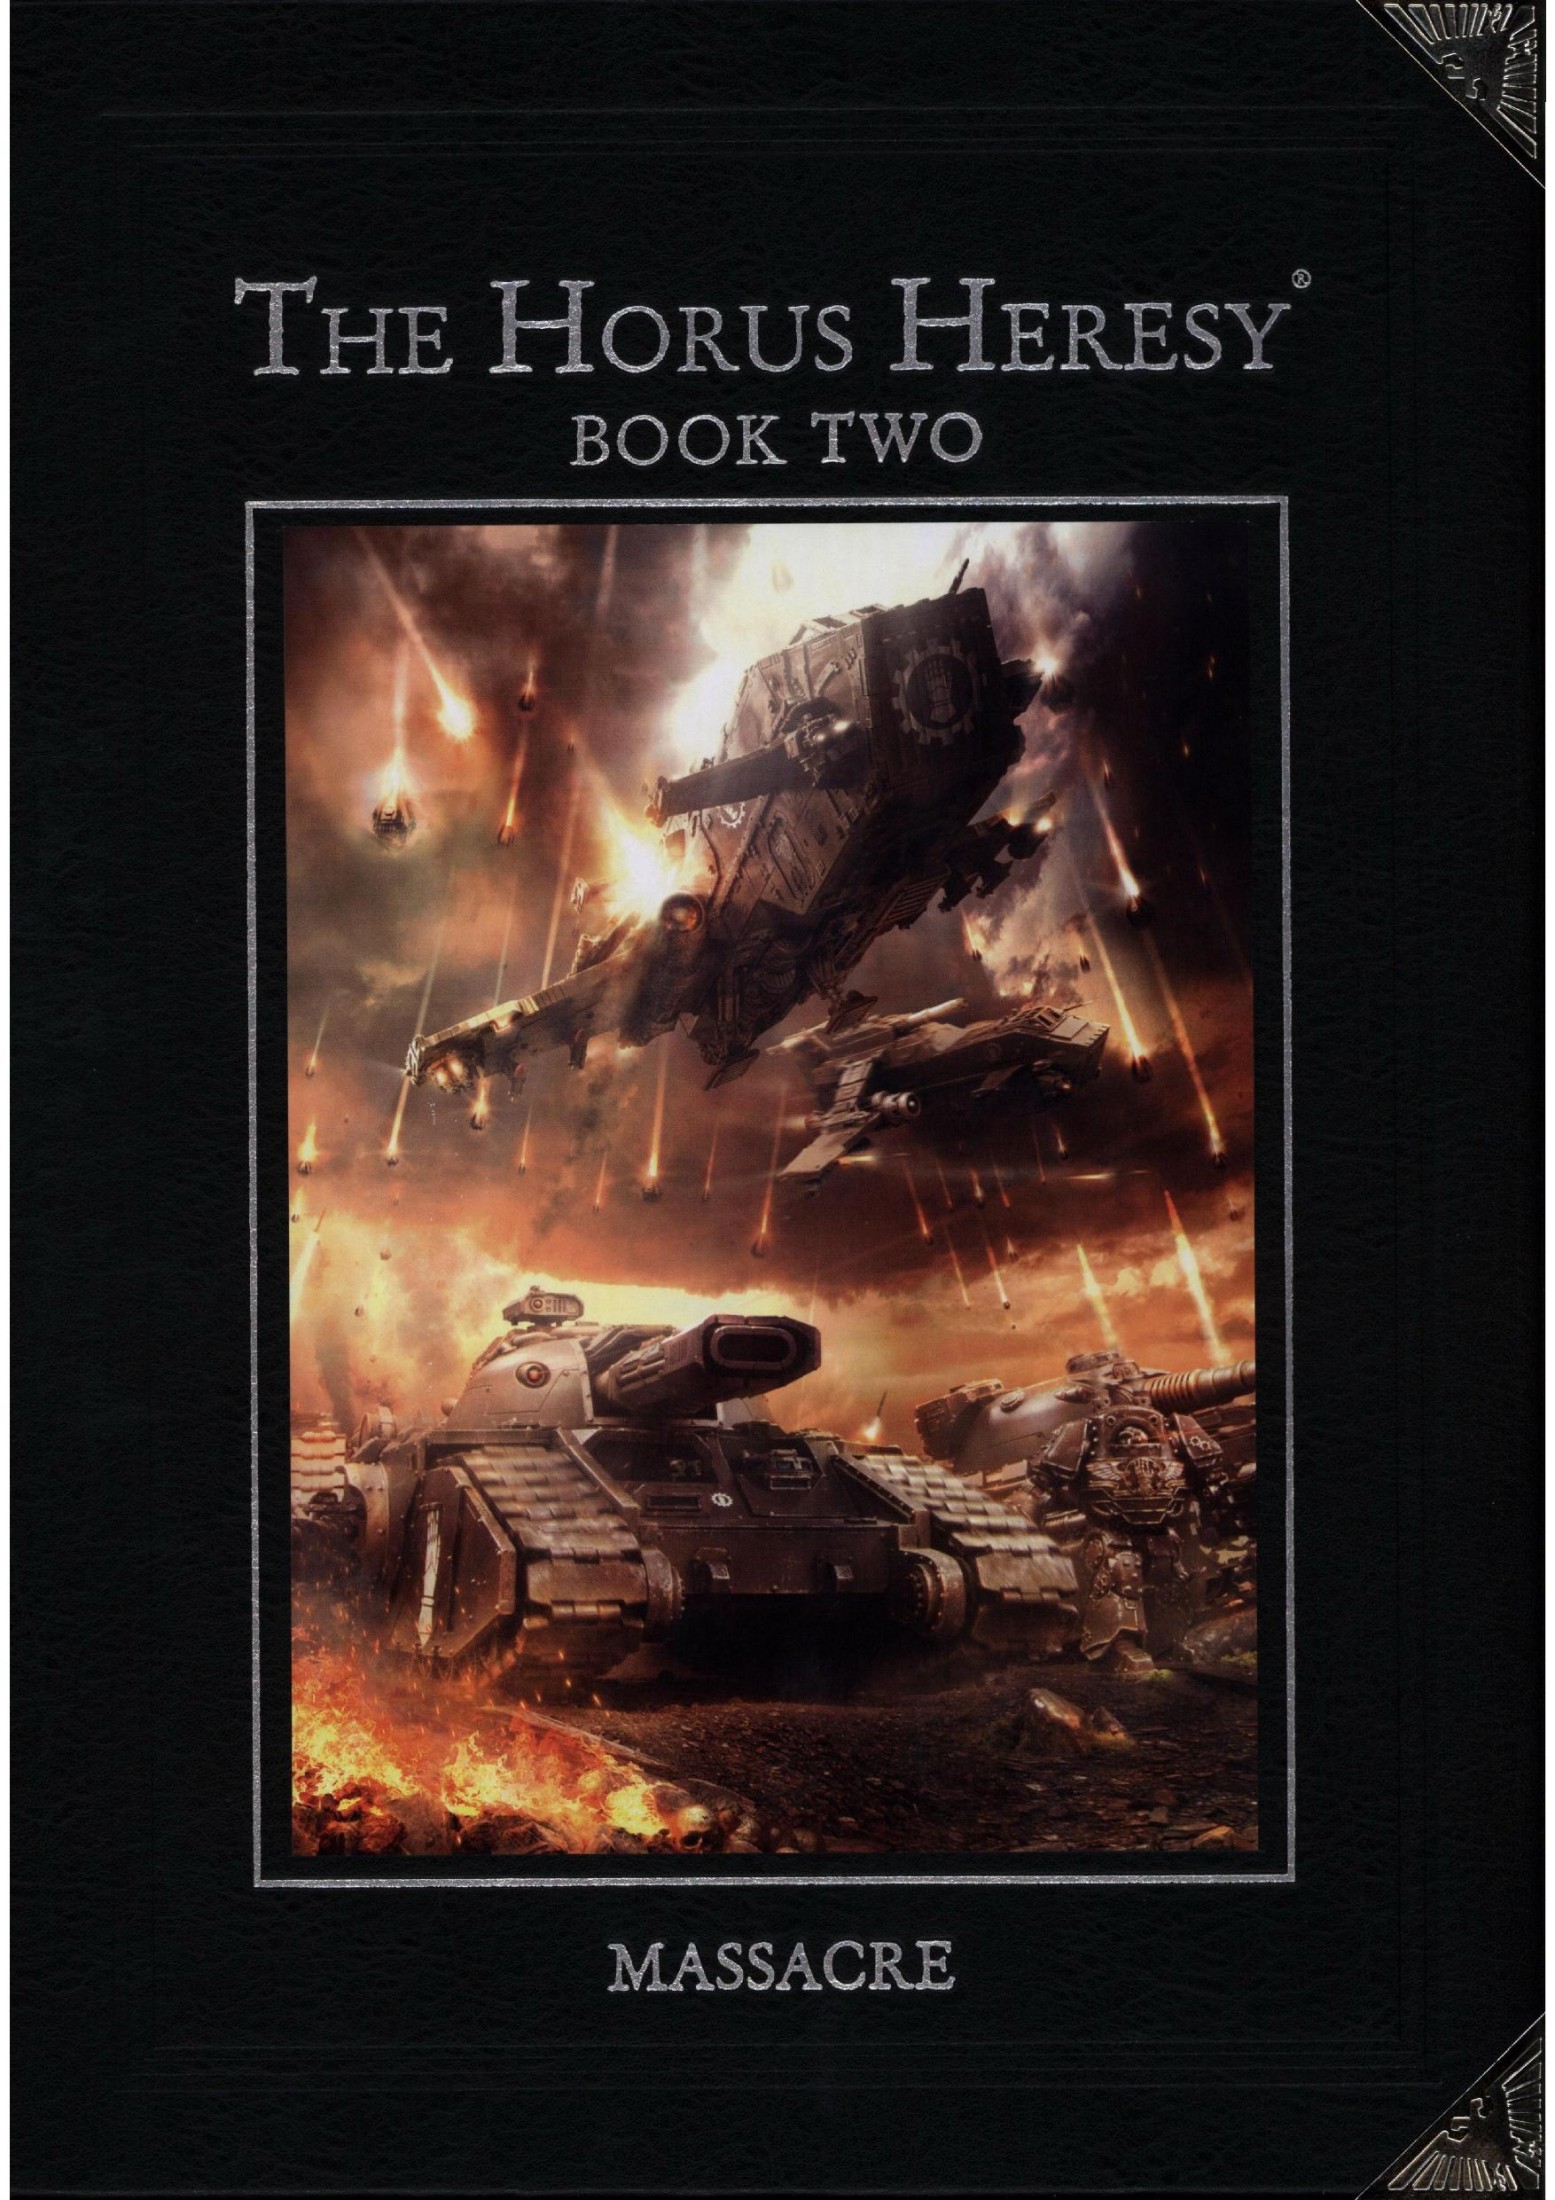 The Horus Heresy Book 2 Massacre